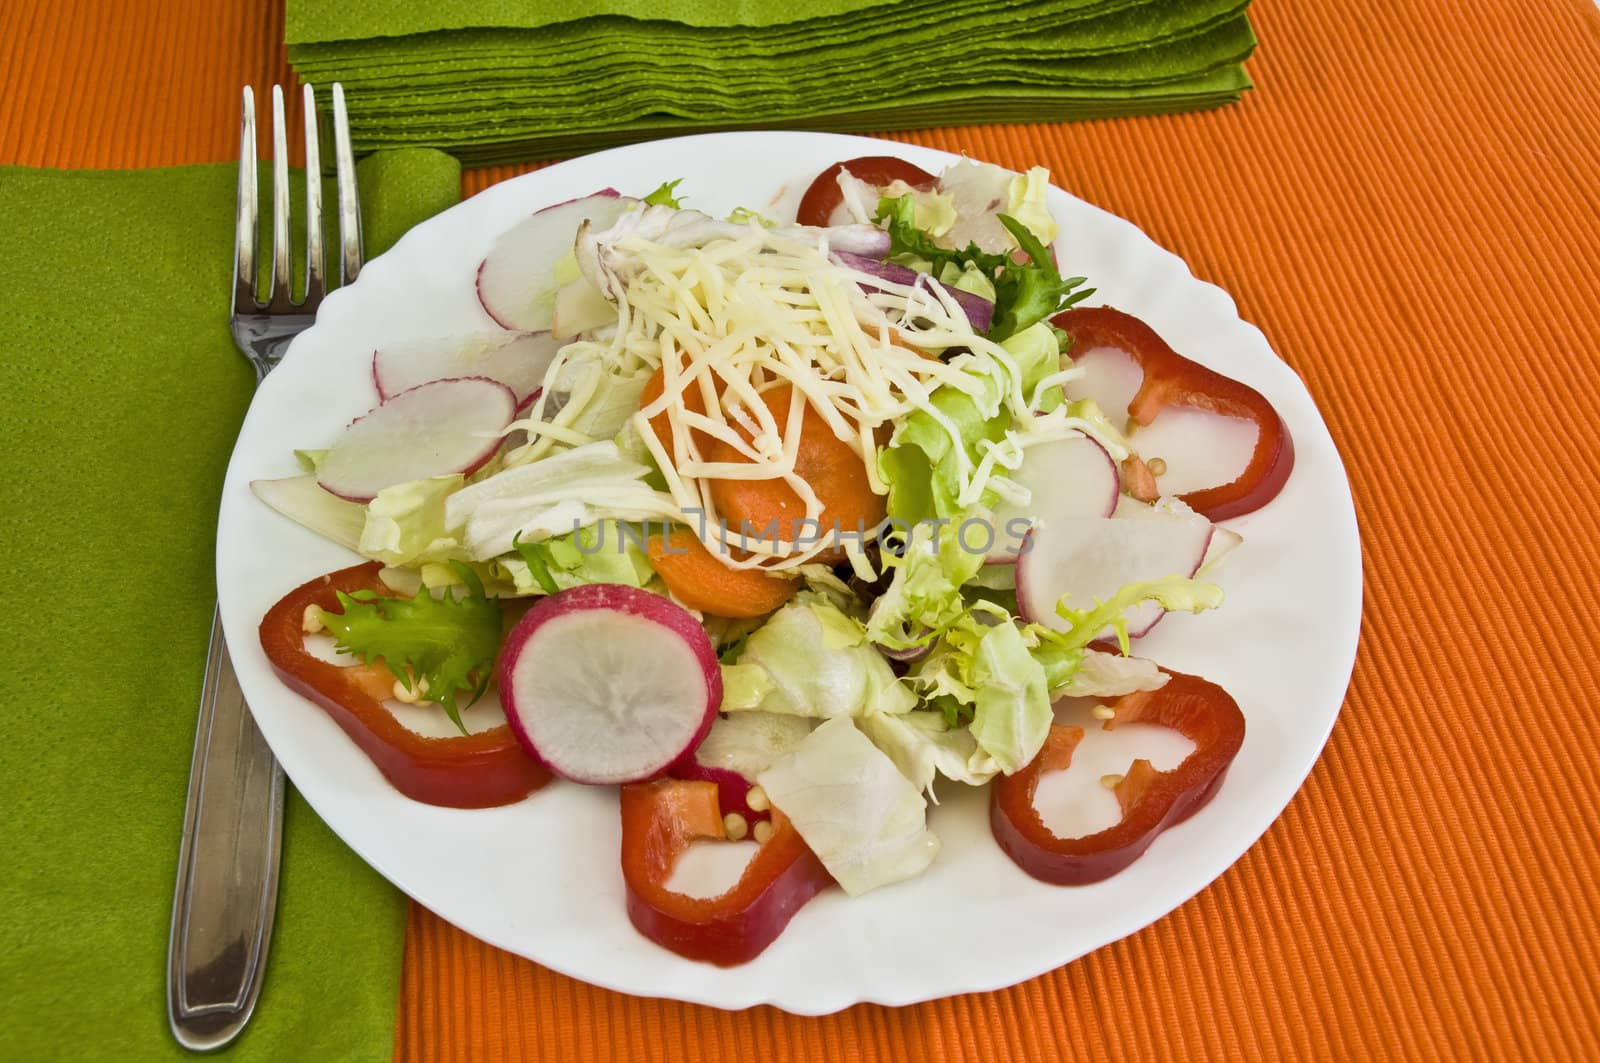 orange and green table setting, light organic salad